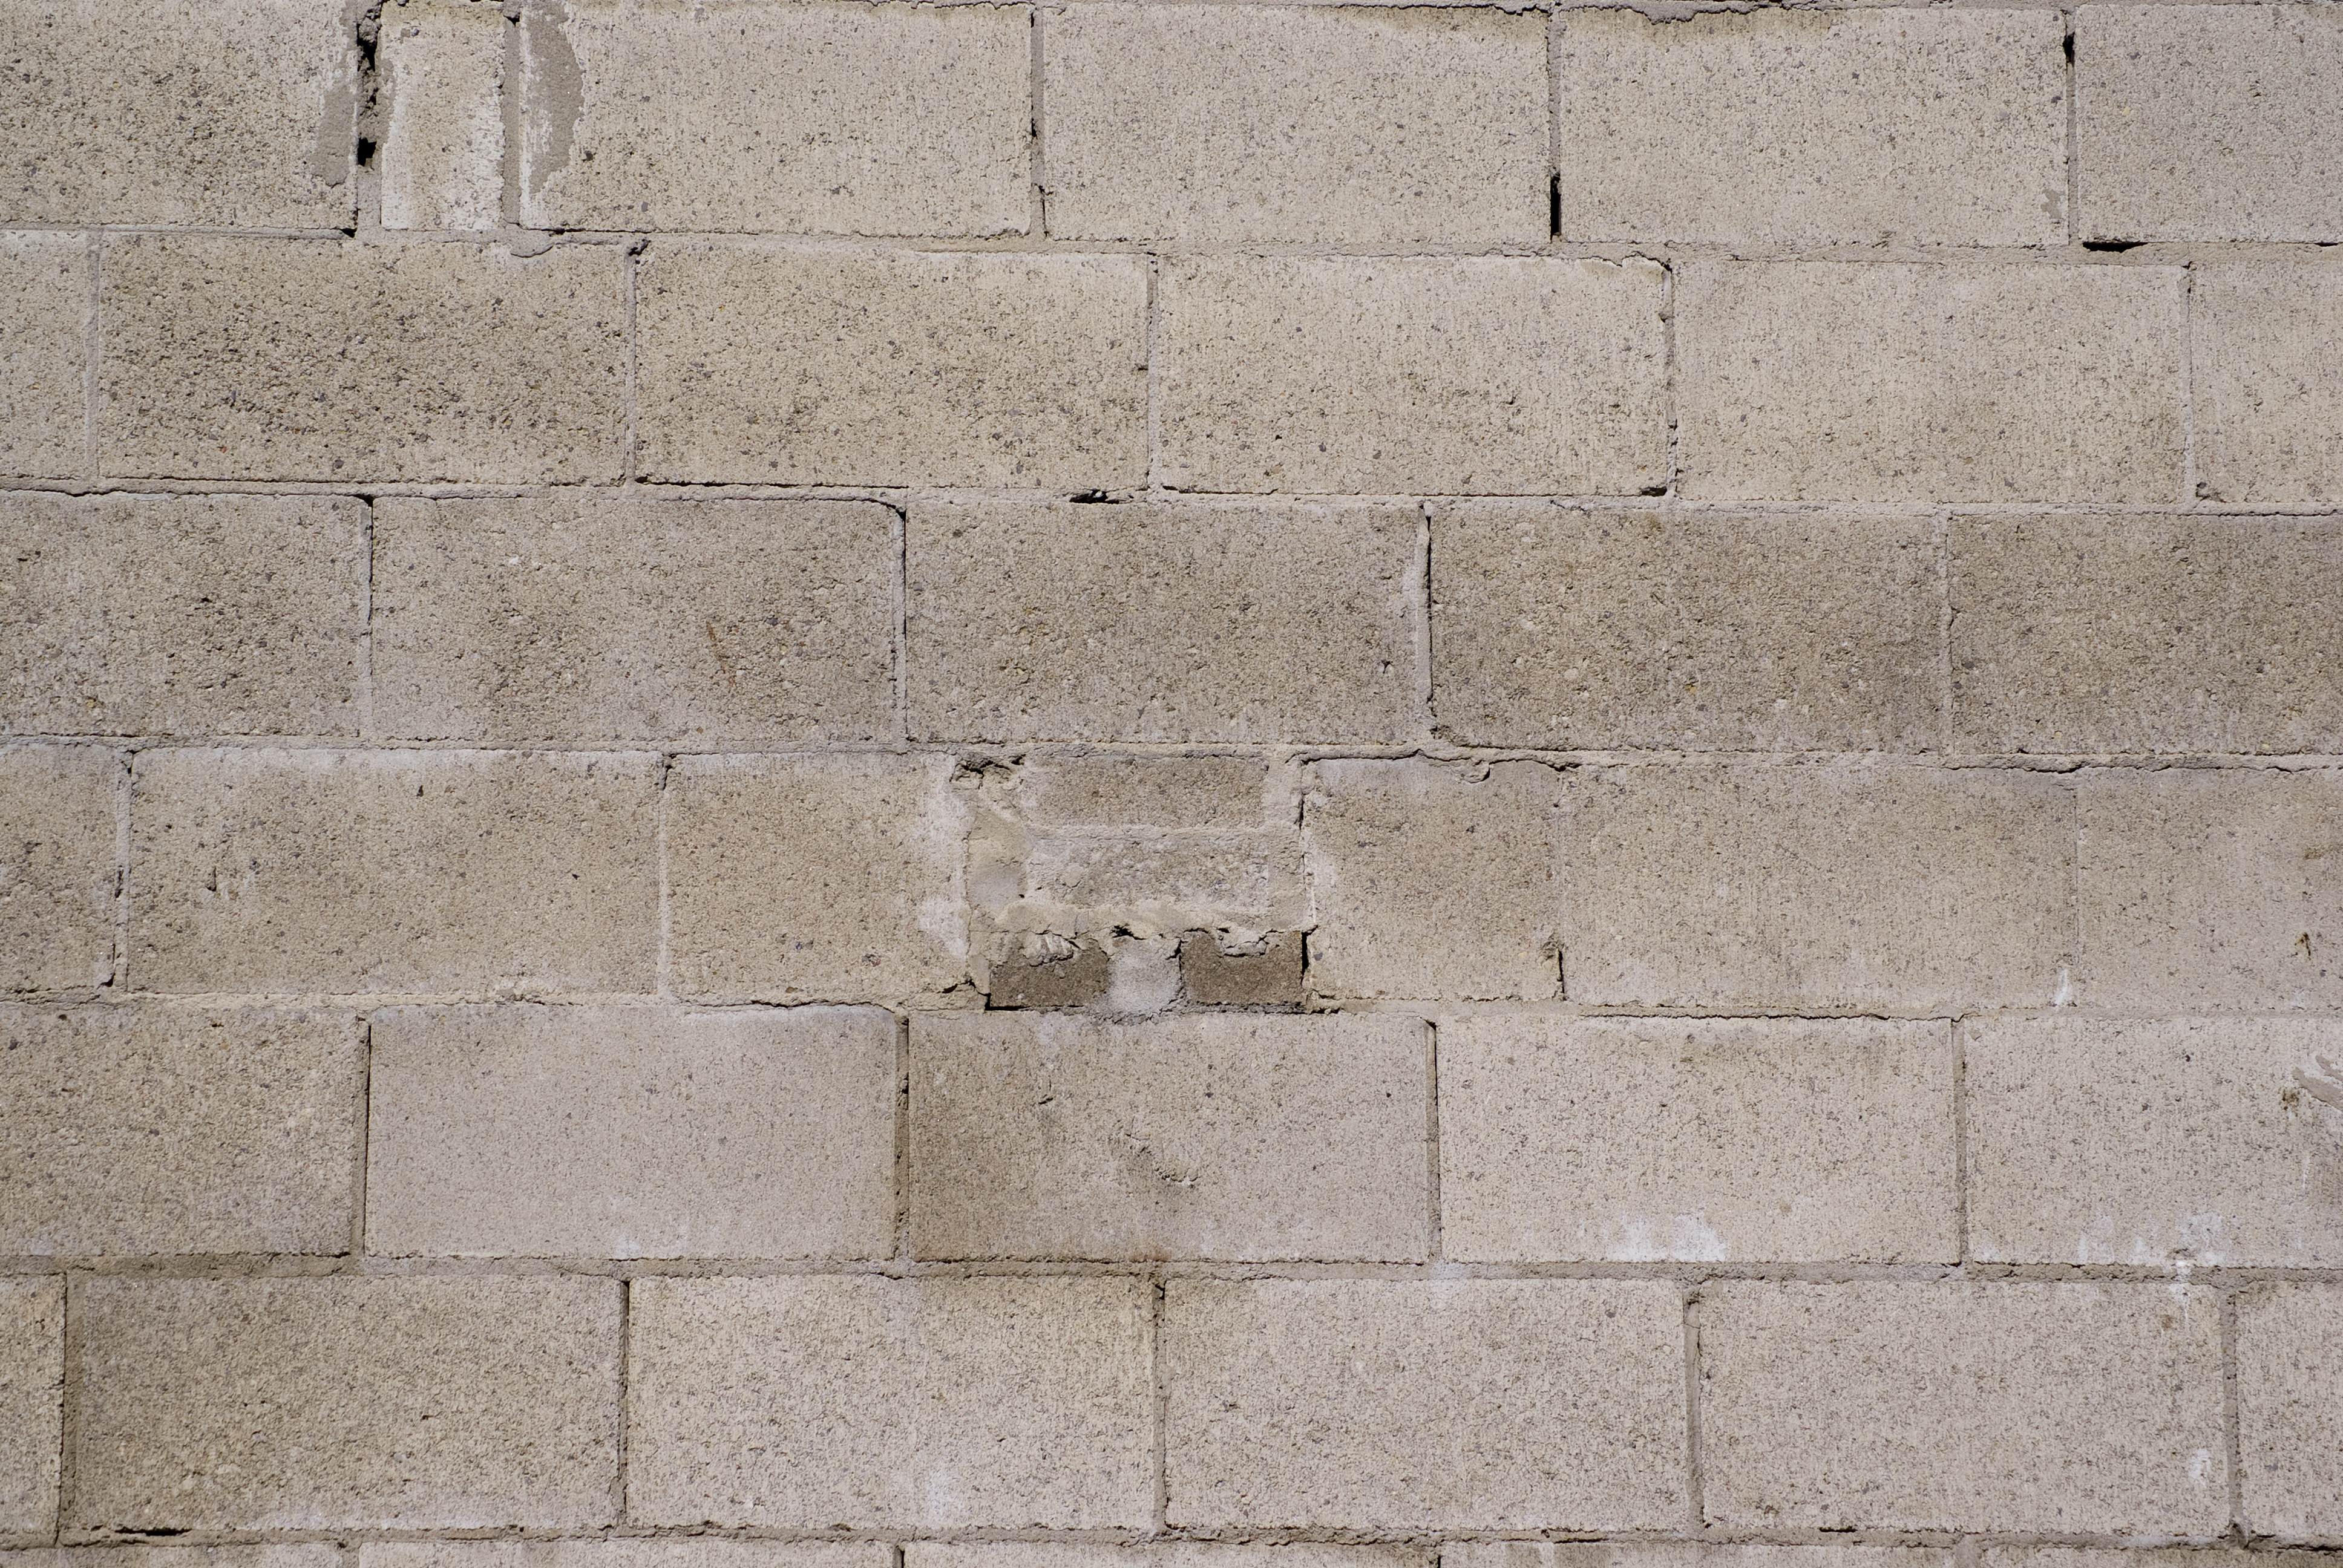 Cinder Block Wall By Mdpratt Size